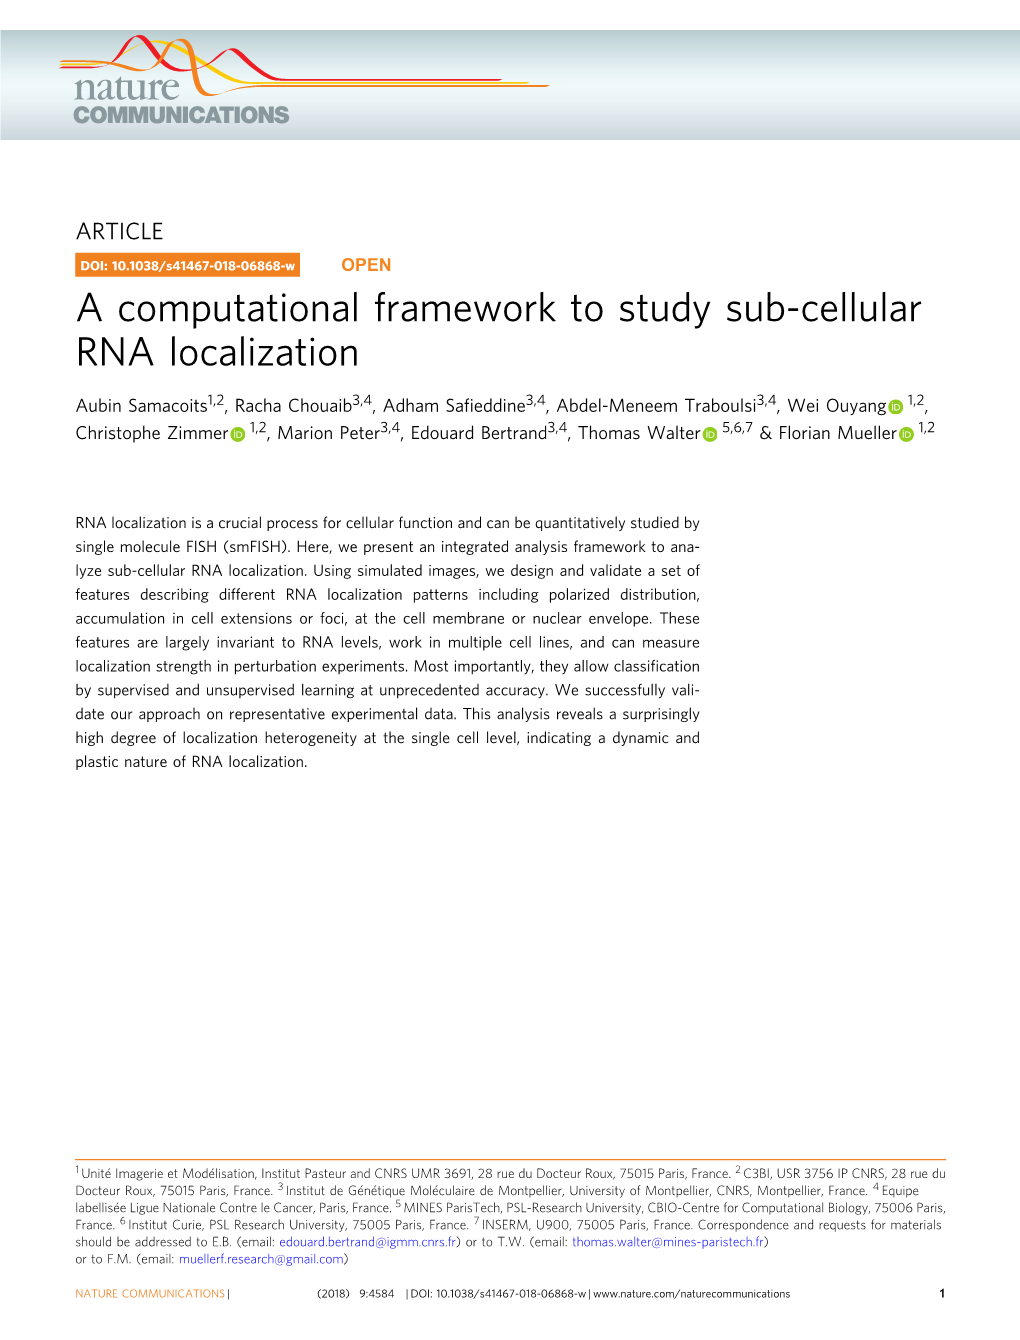 A Computational Framework to Study Sub-Cellular RNA Localization